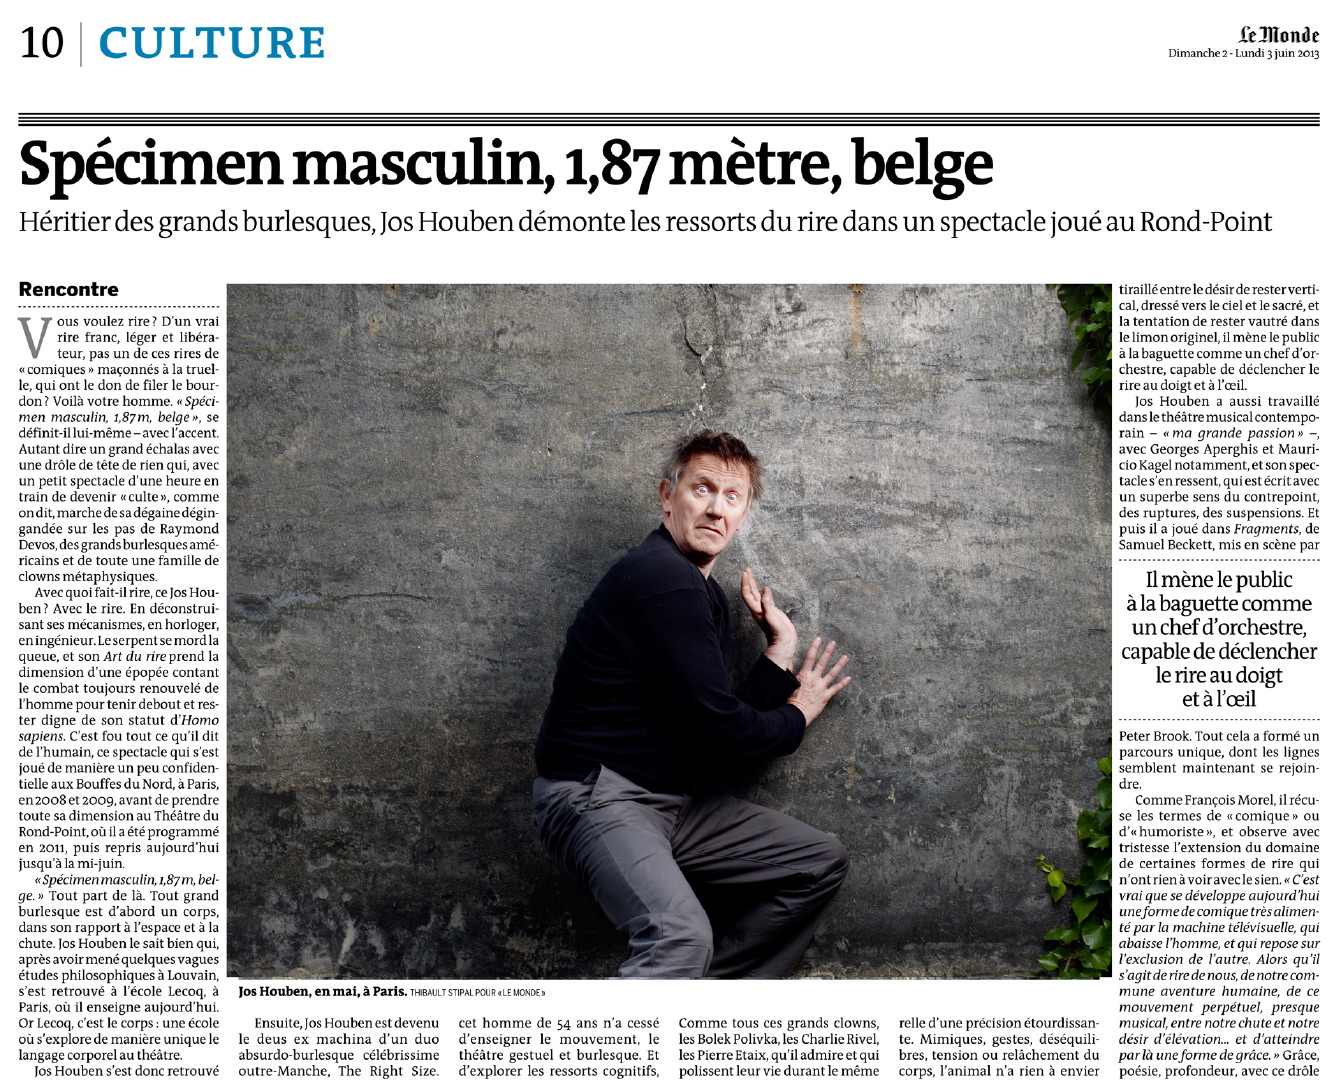 Thibault Stipal - Photographe - Jos Houben / Le Monde - 2